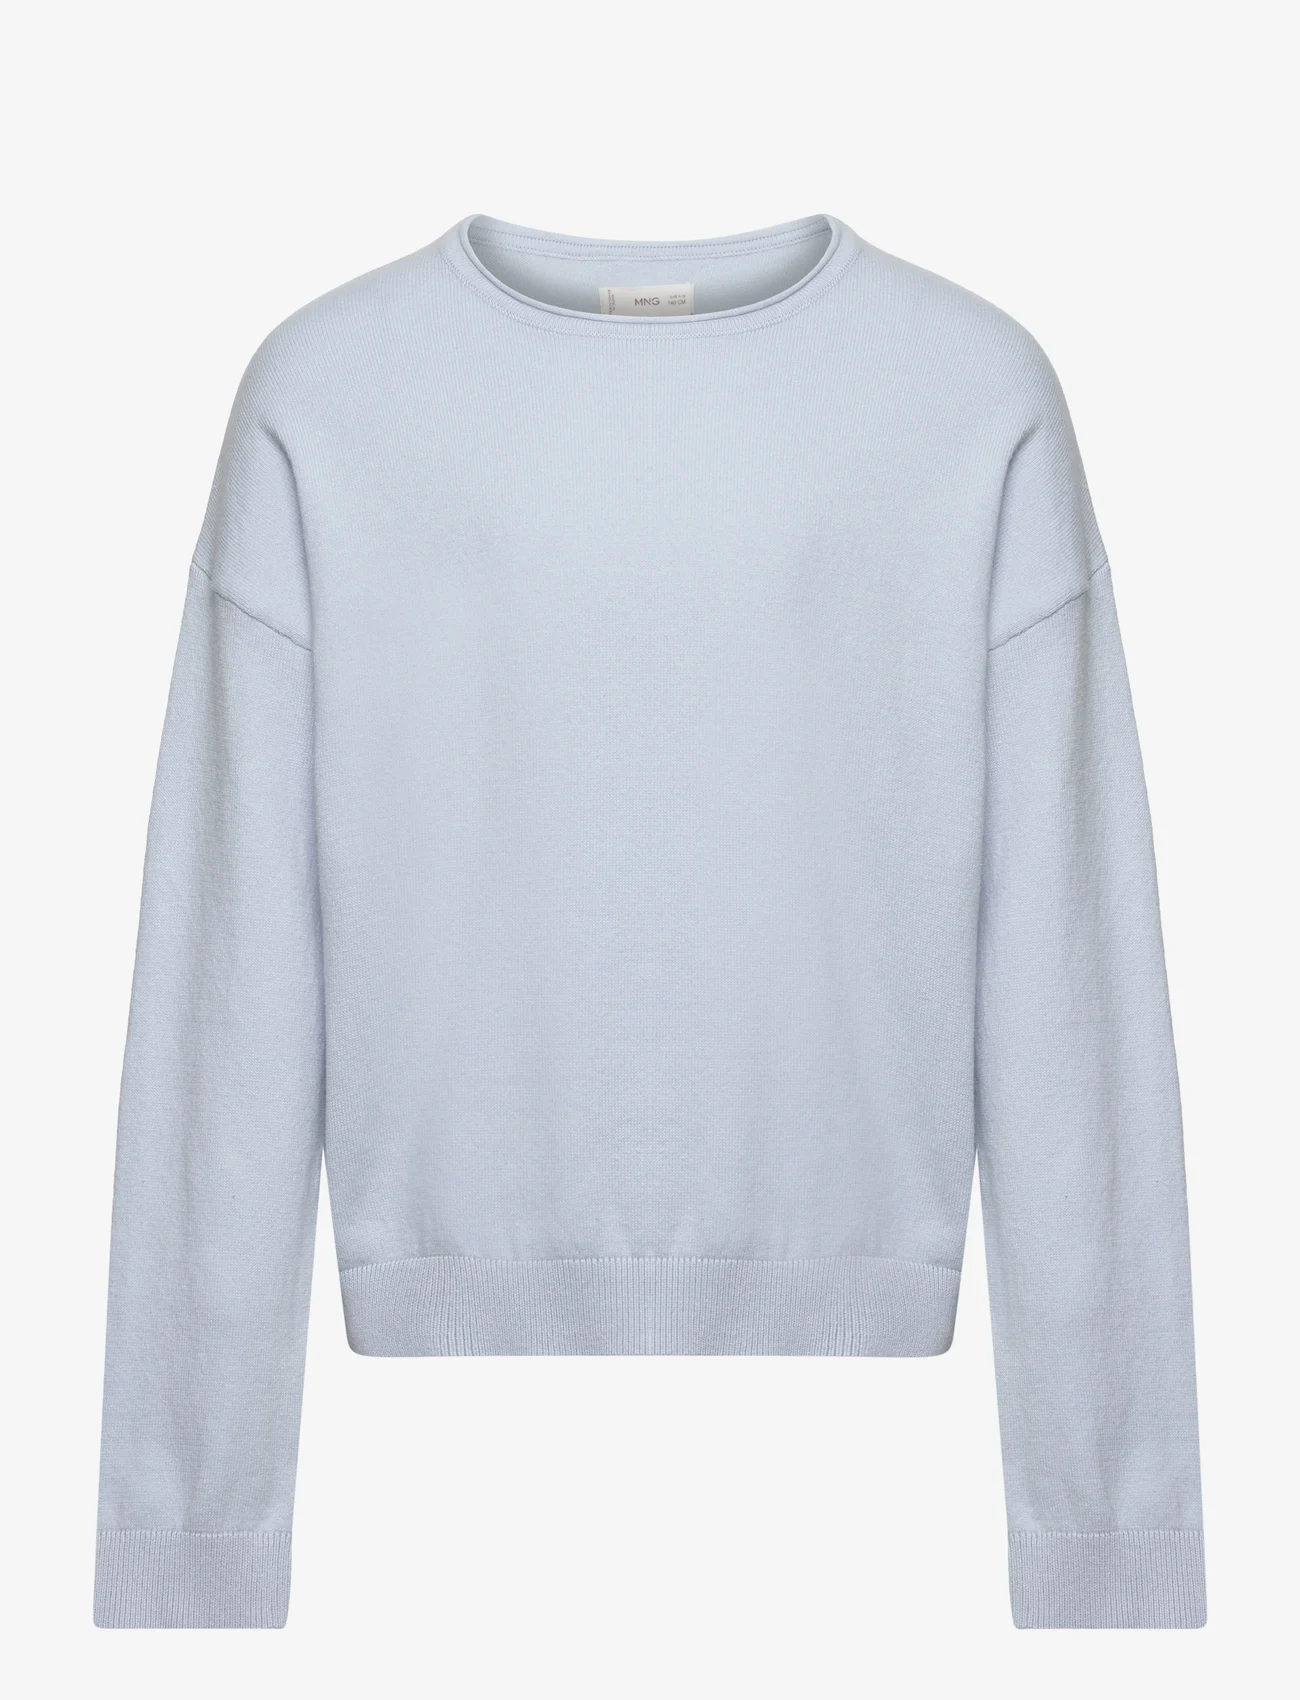 Mango - Knit cotton sweater - tröjor - lt-pastel blue - 0